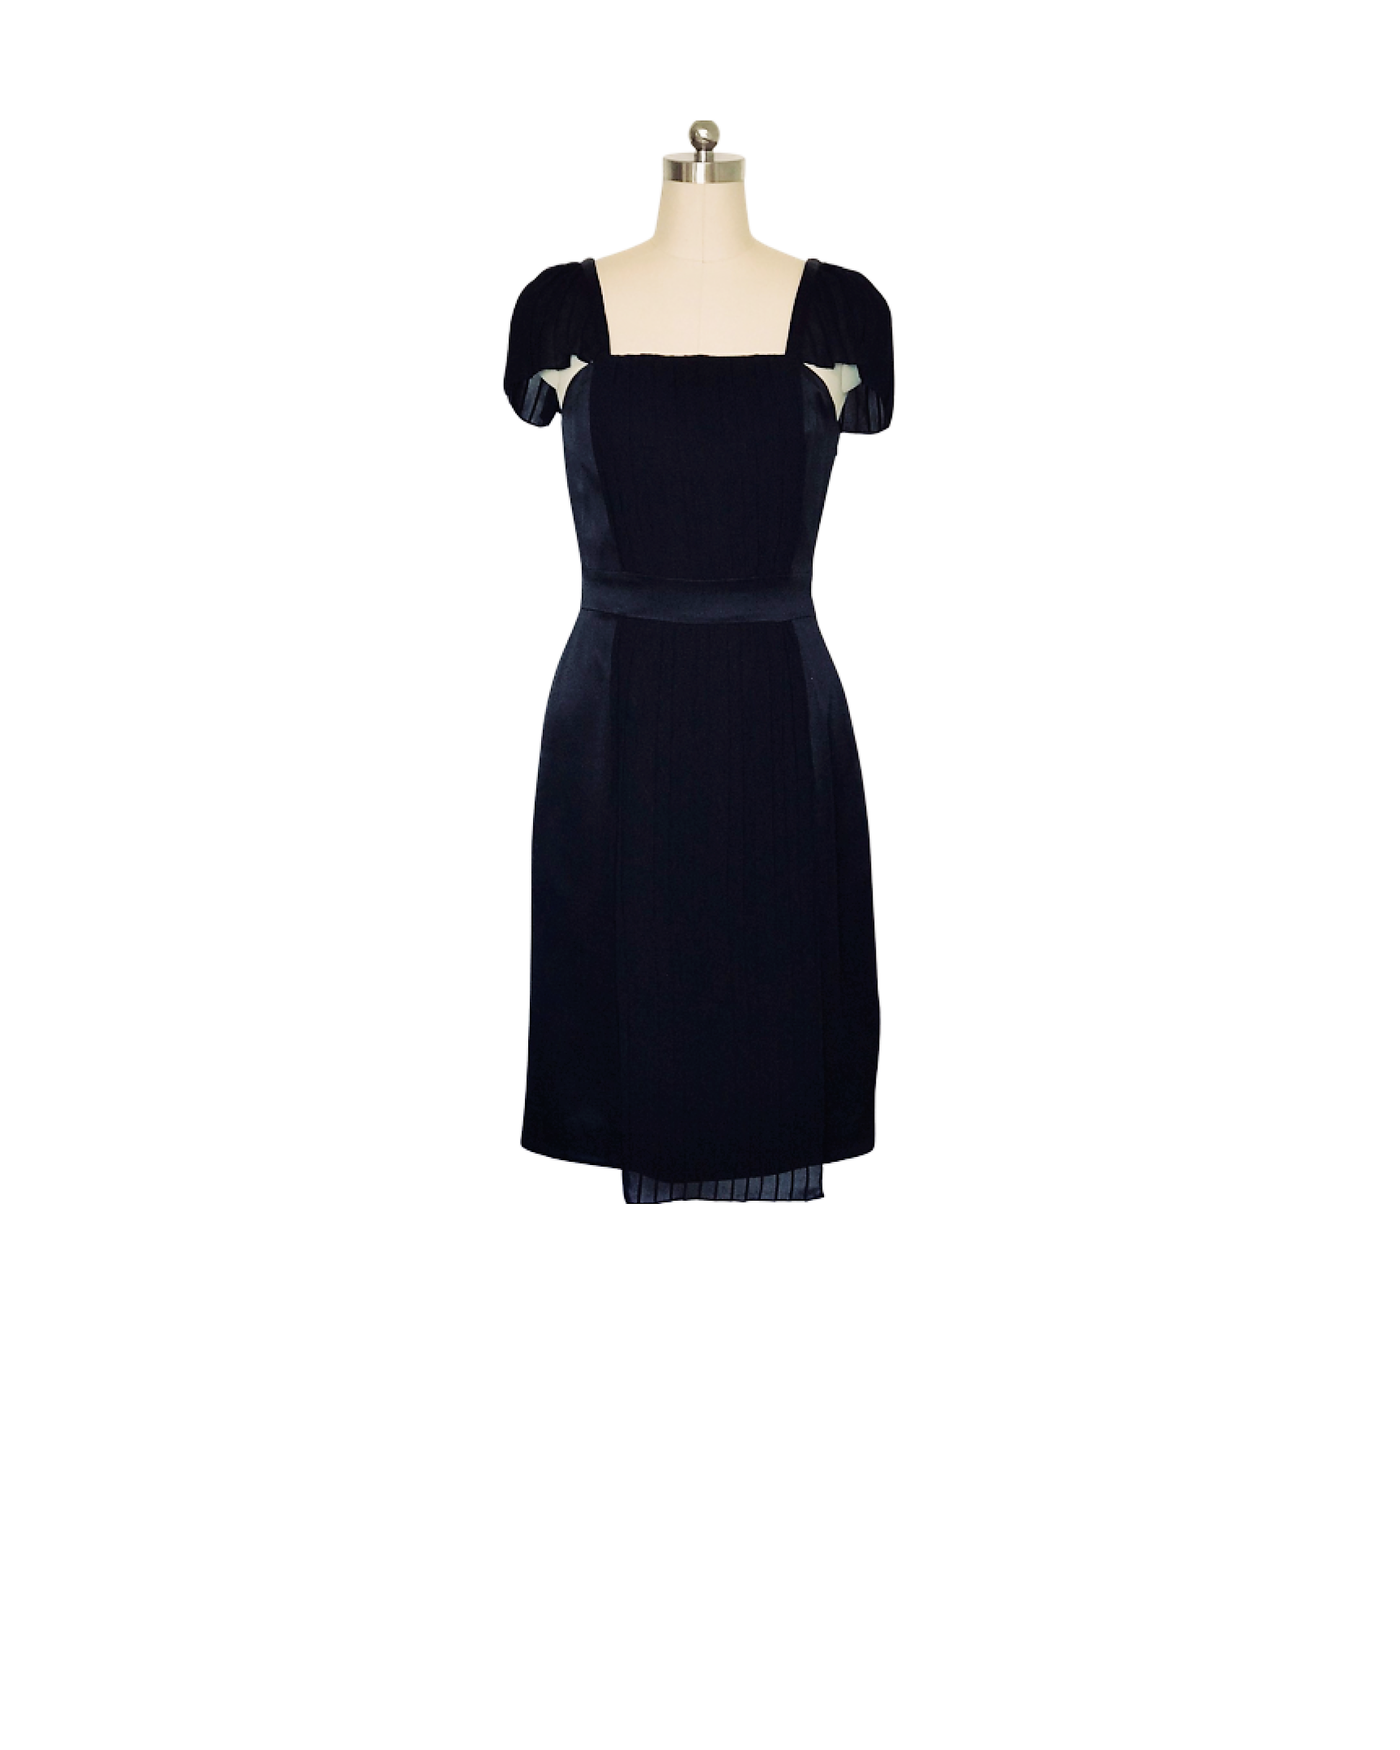 Black Pleated Cocktail Dress